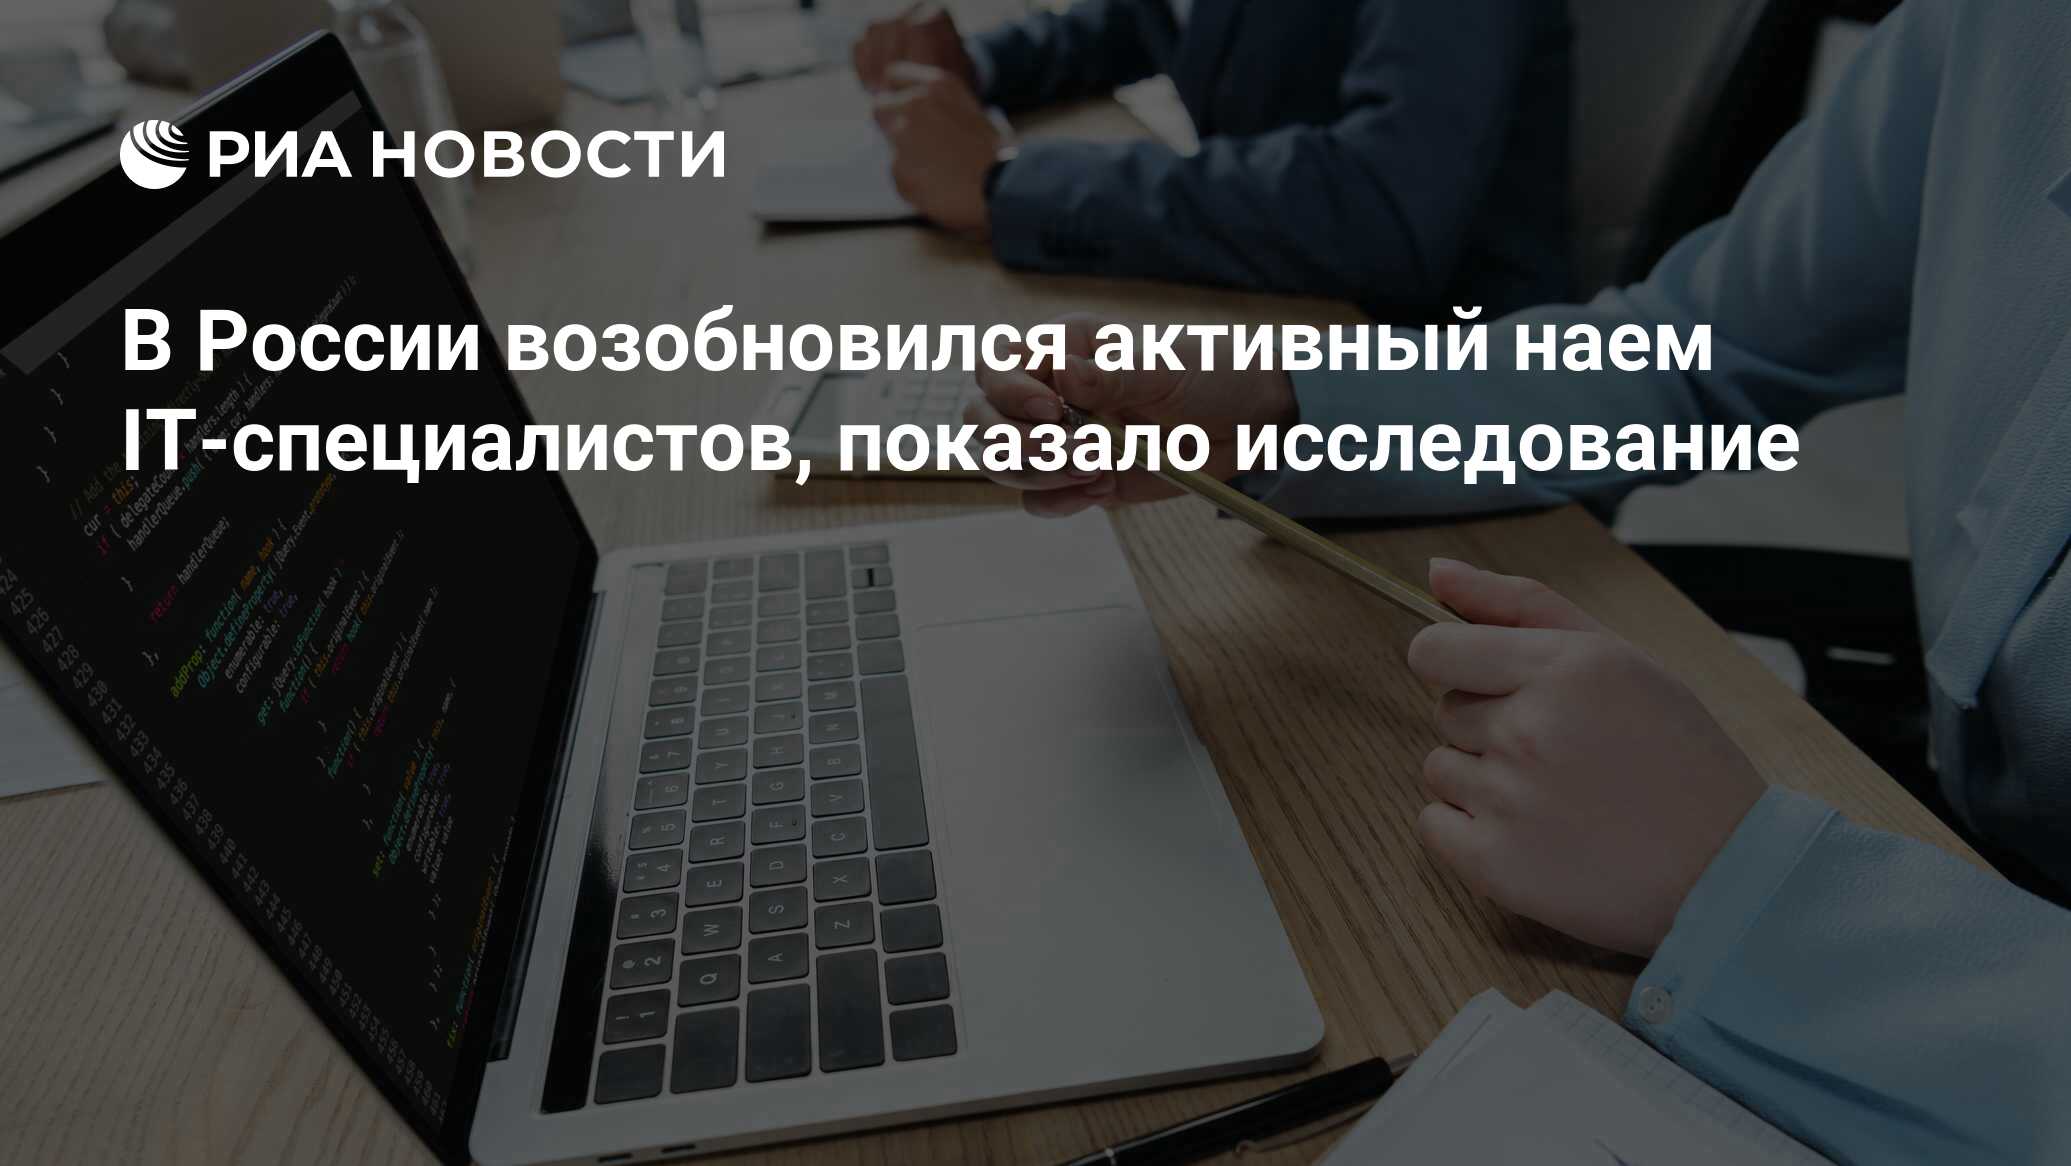 Active hiring of IT specialists resumed in Russia, examine reveals